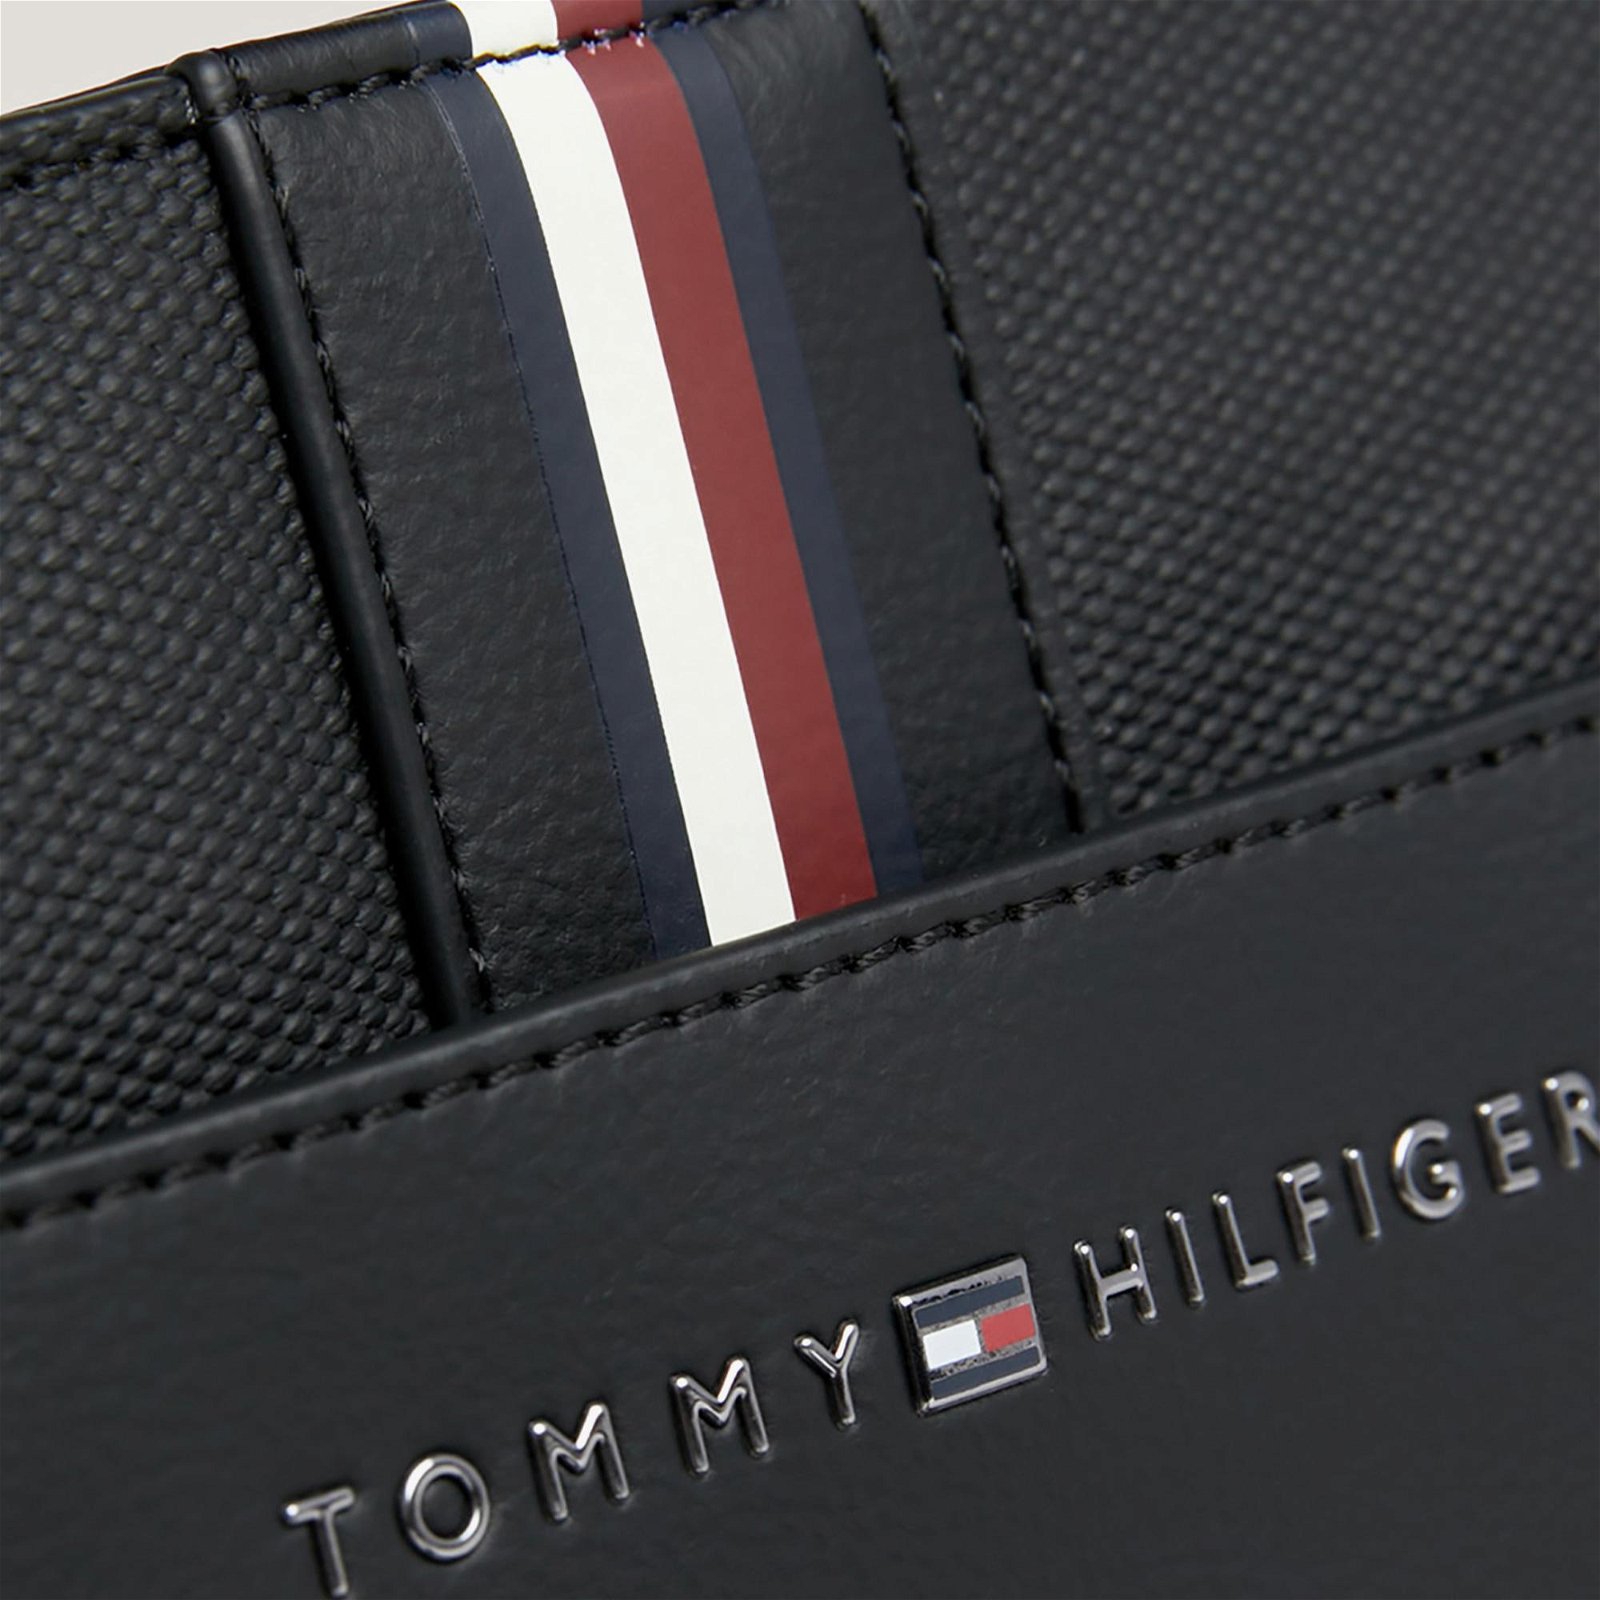 Tommy Hilfiger Corporate Mini Erkek Siyah Omuz Çantası